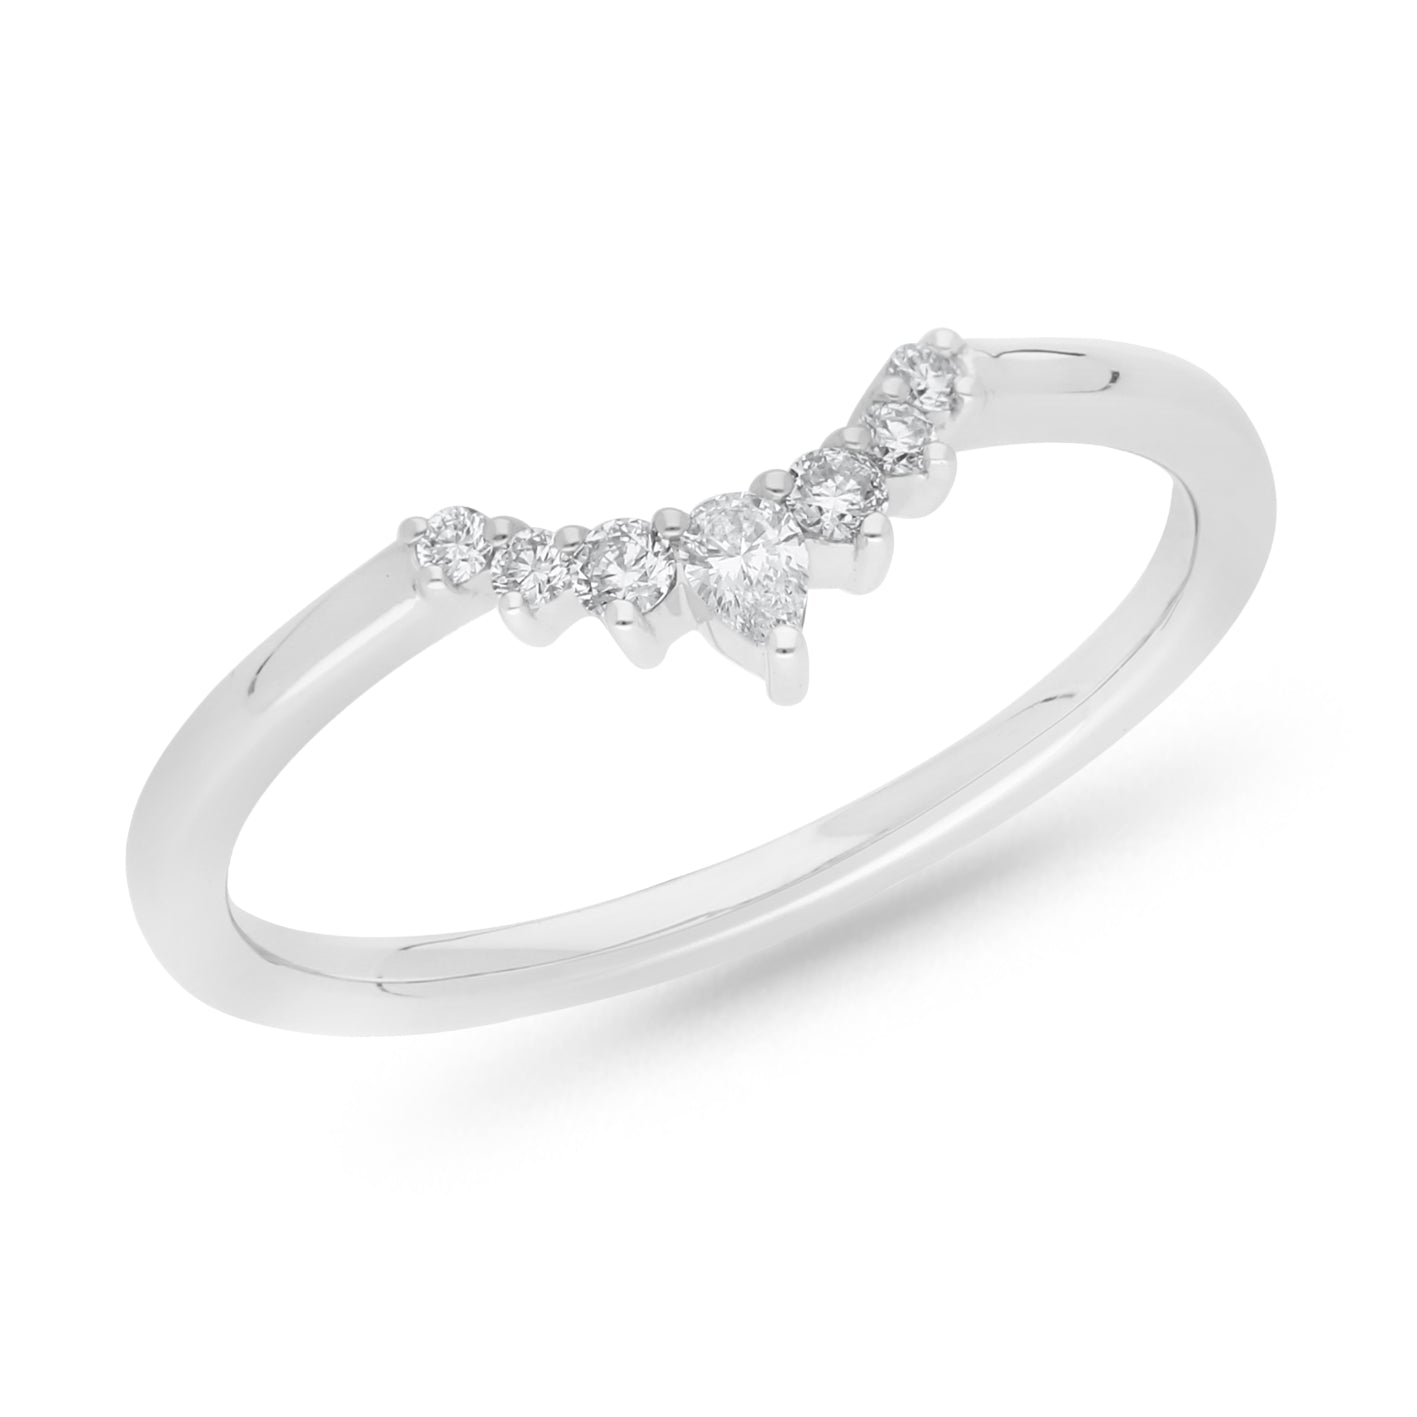 18ct gold Pear & Brilliant Cut shaped wedding ring, 0.14 carats.